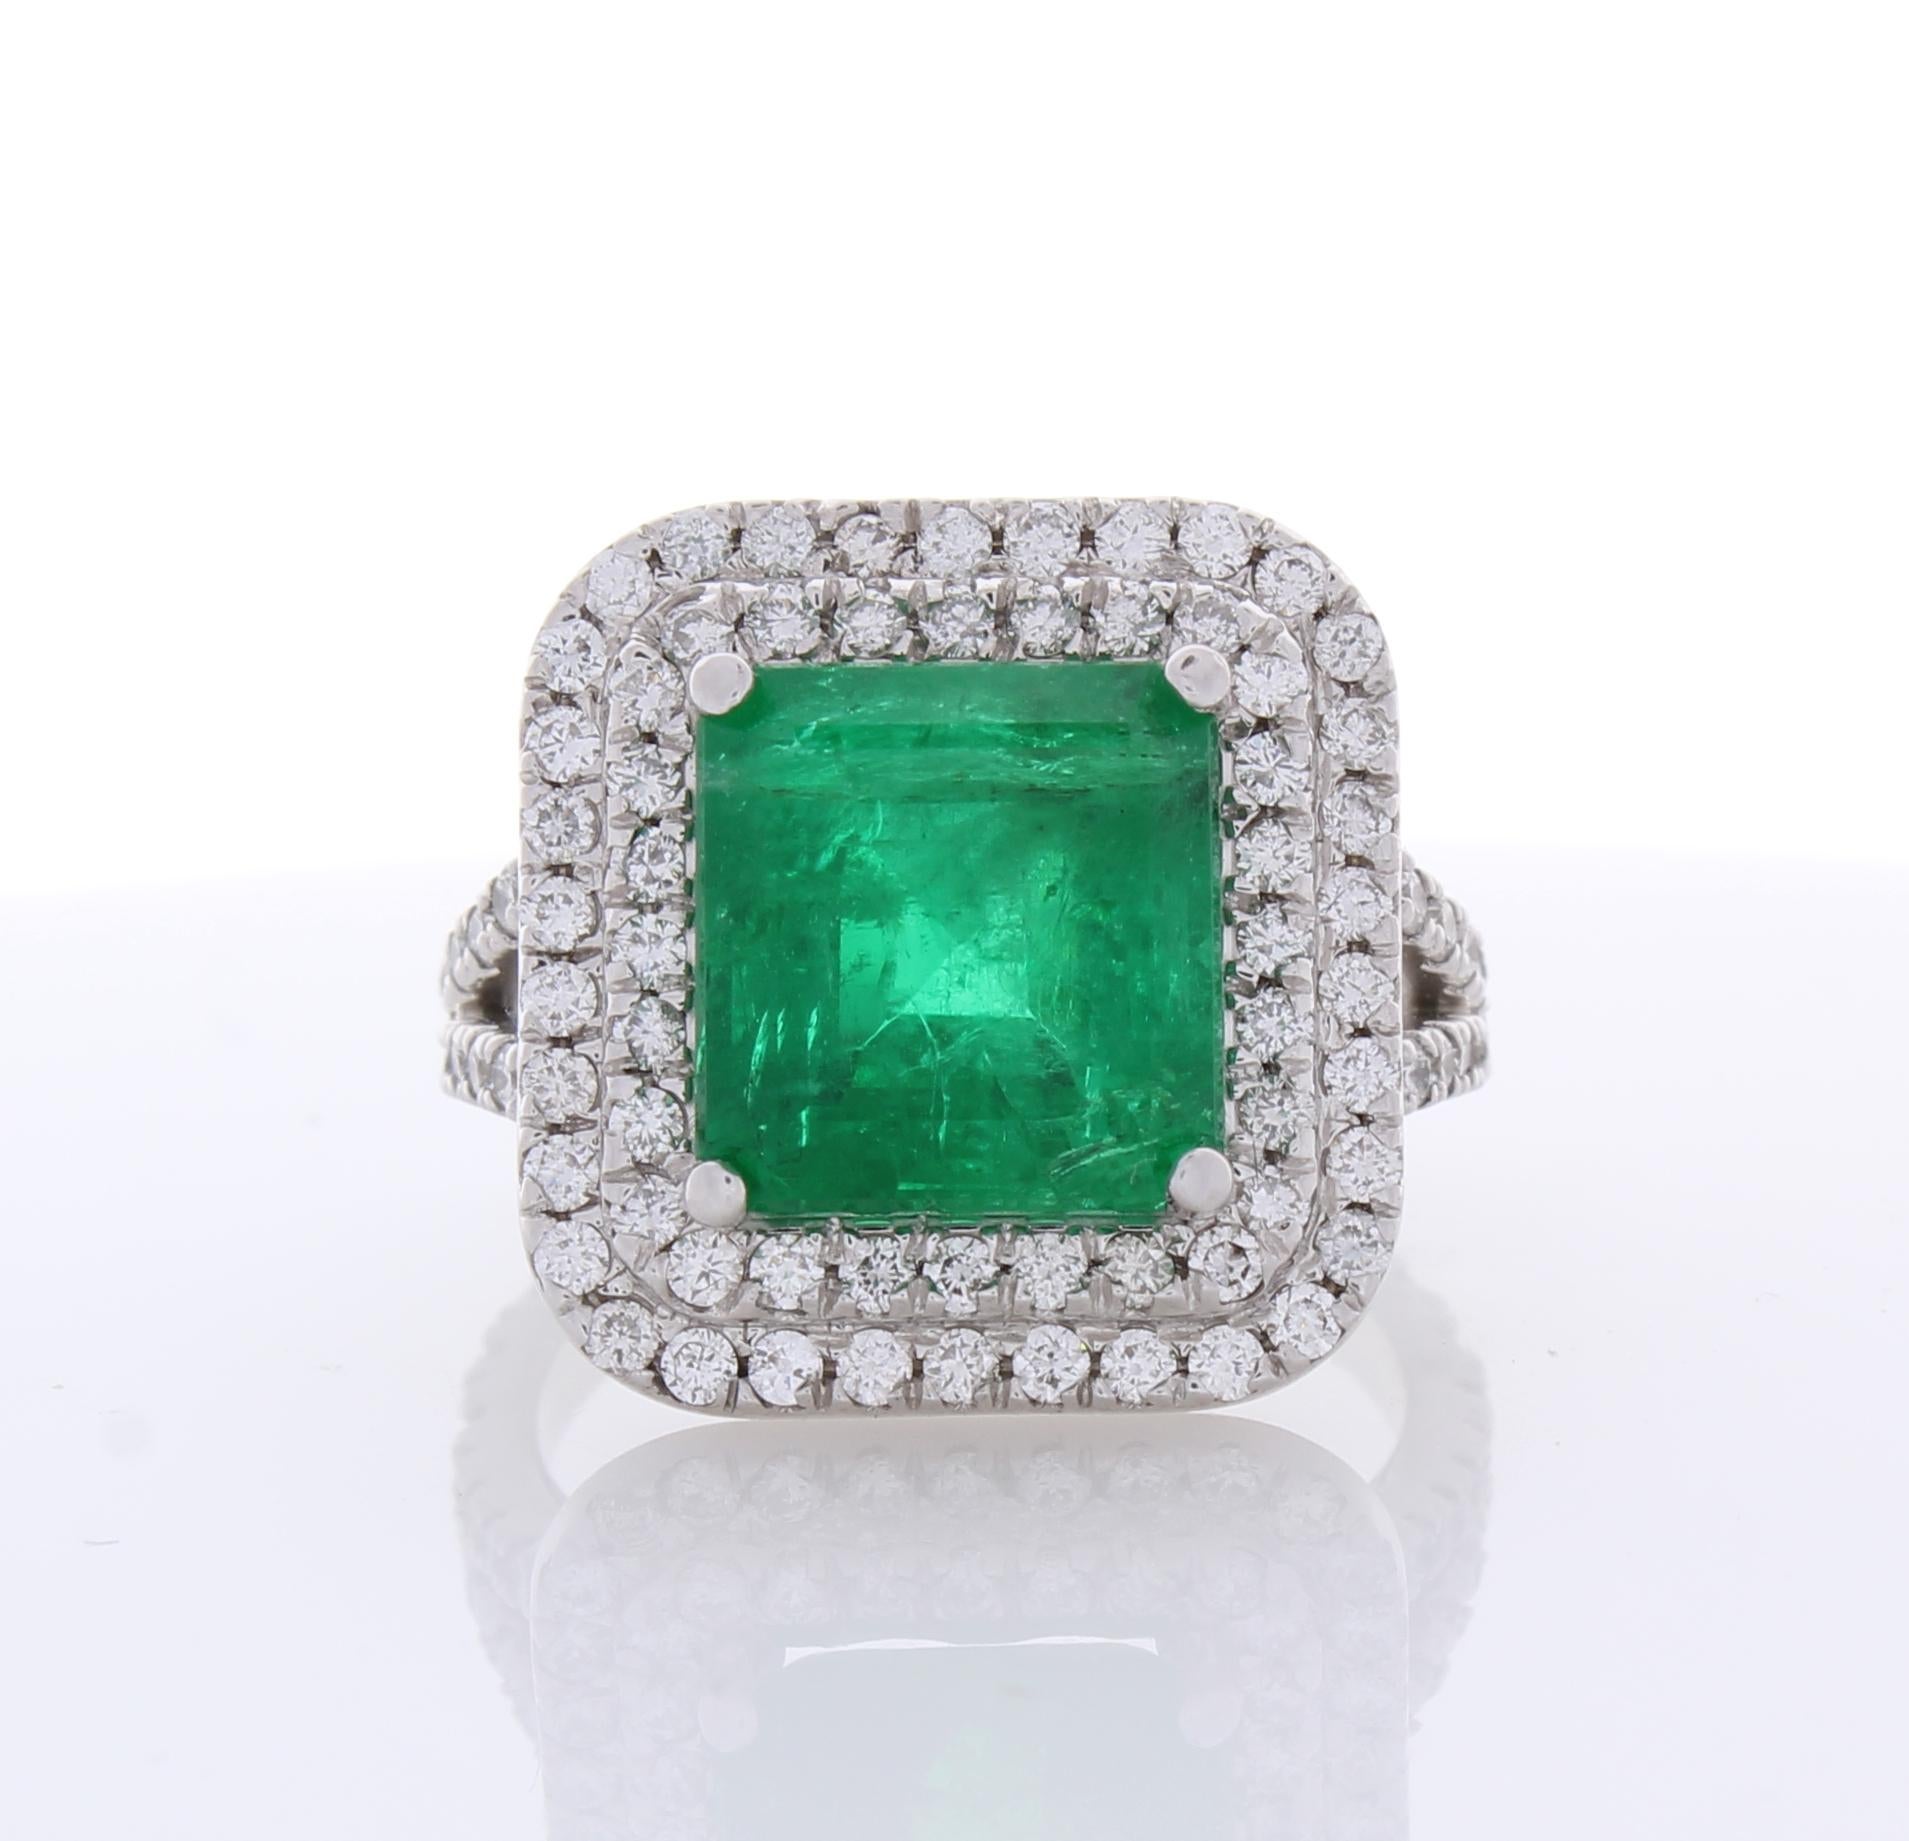 5.30 Carat Emerald Cut Emerald and Diamond Cocktail Ring in 18 Karat White Gold 2